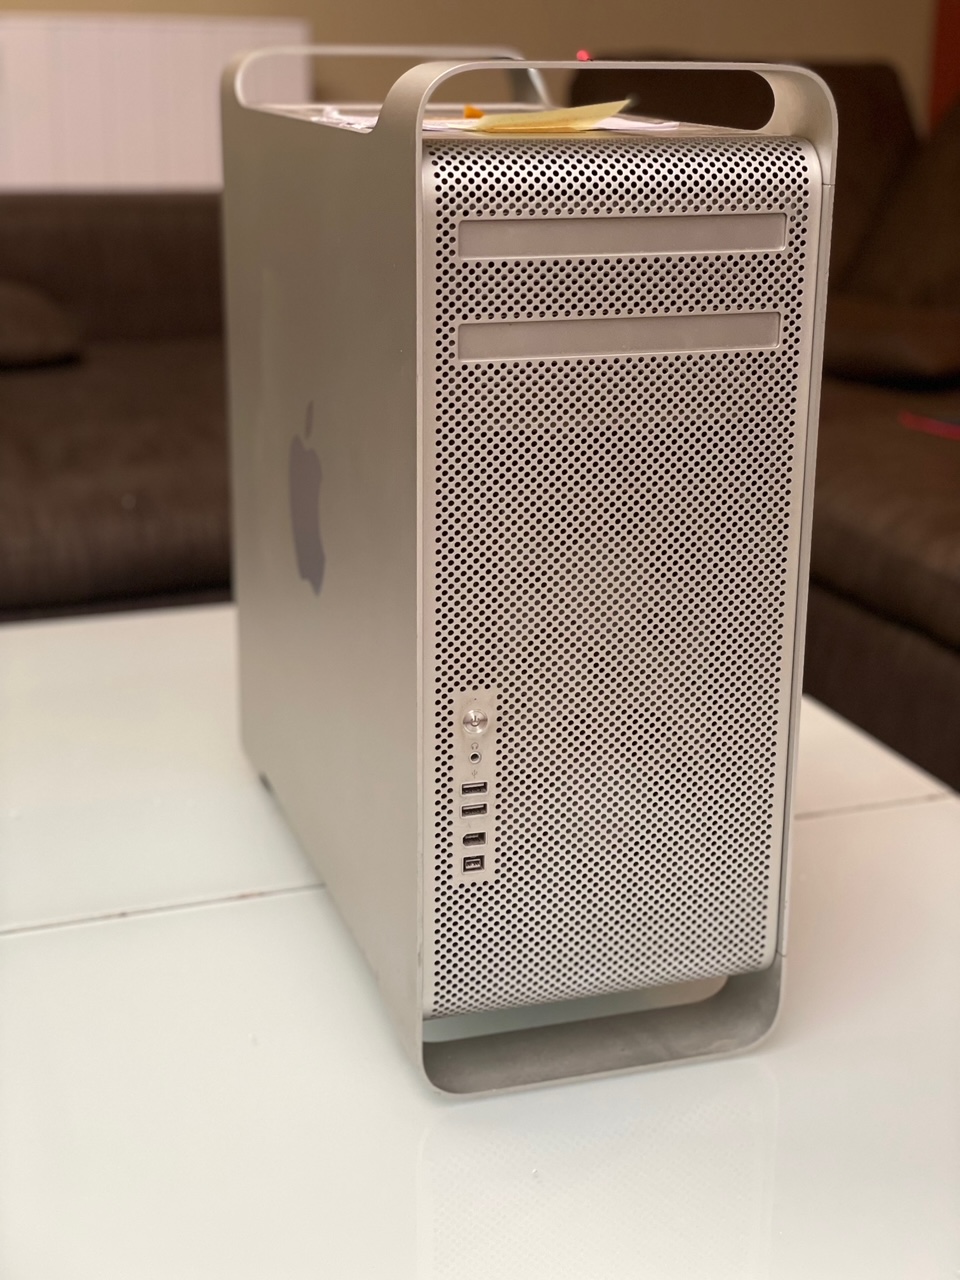 Apple Mac Pro 3,1 4×2,8Ghz (2008)